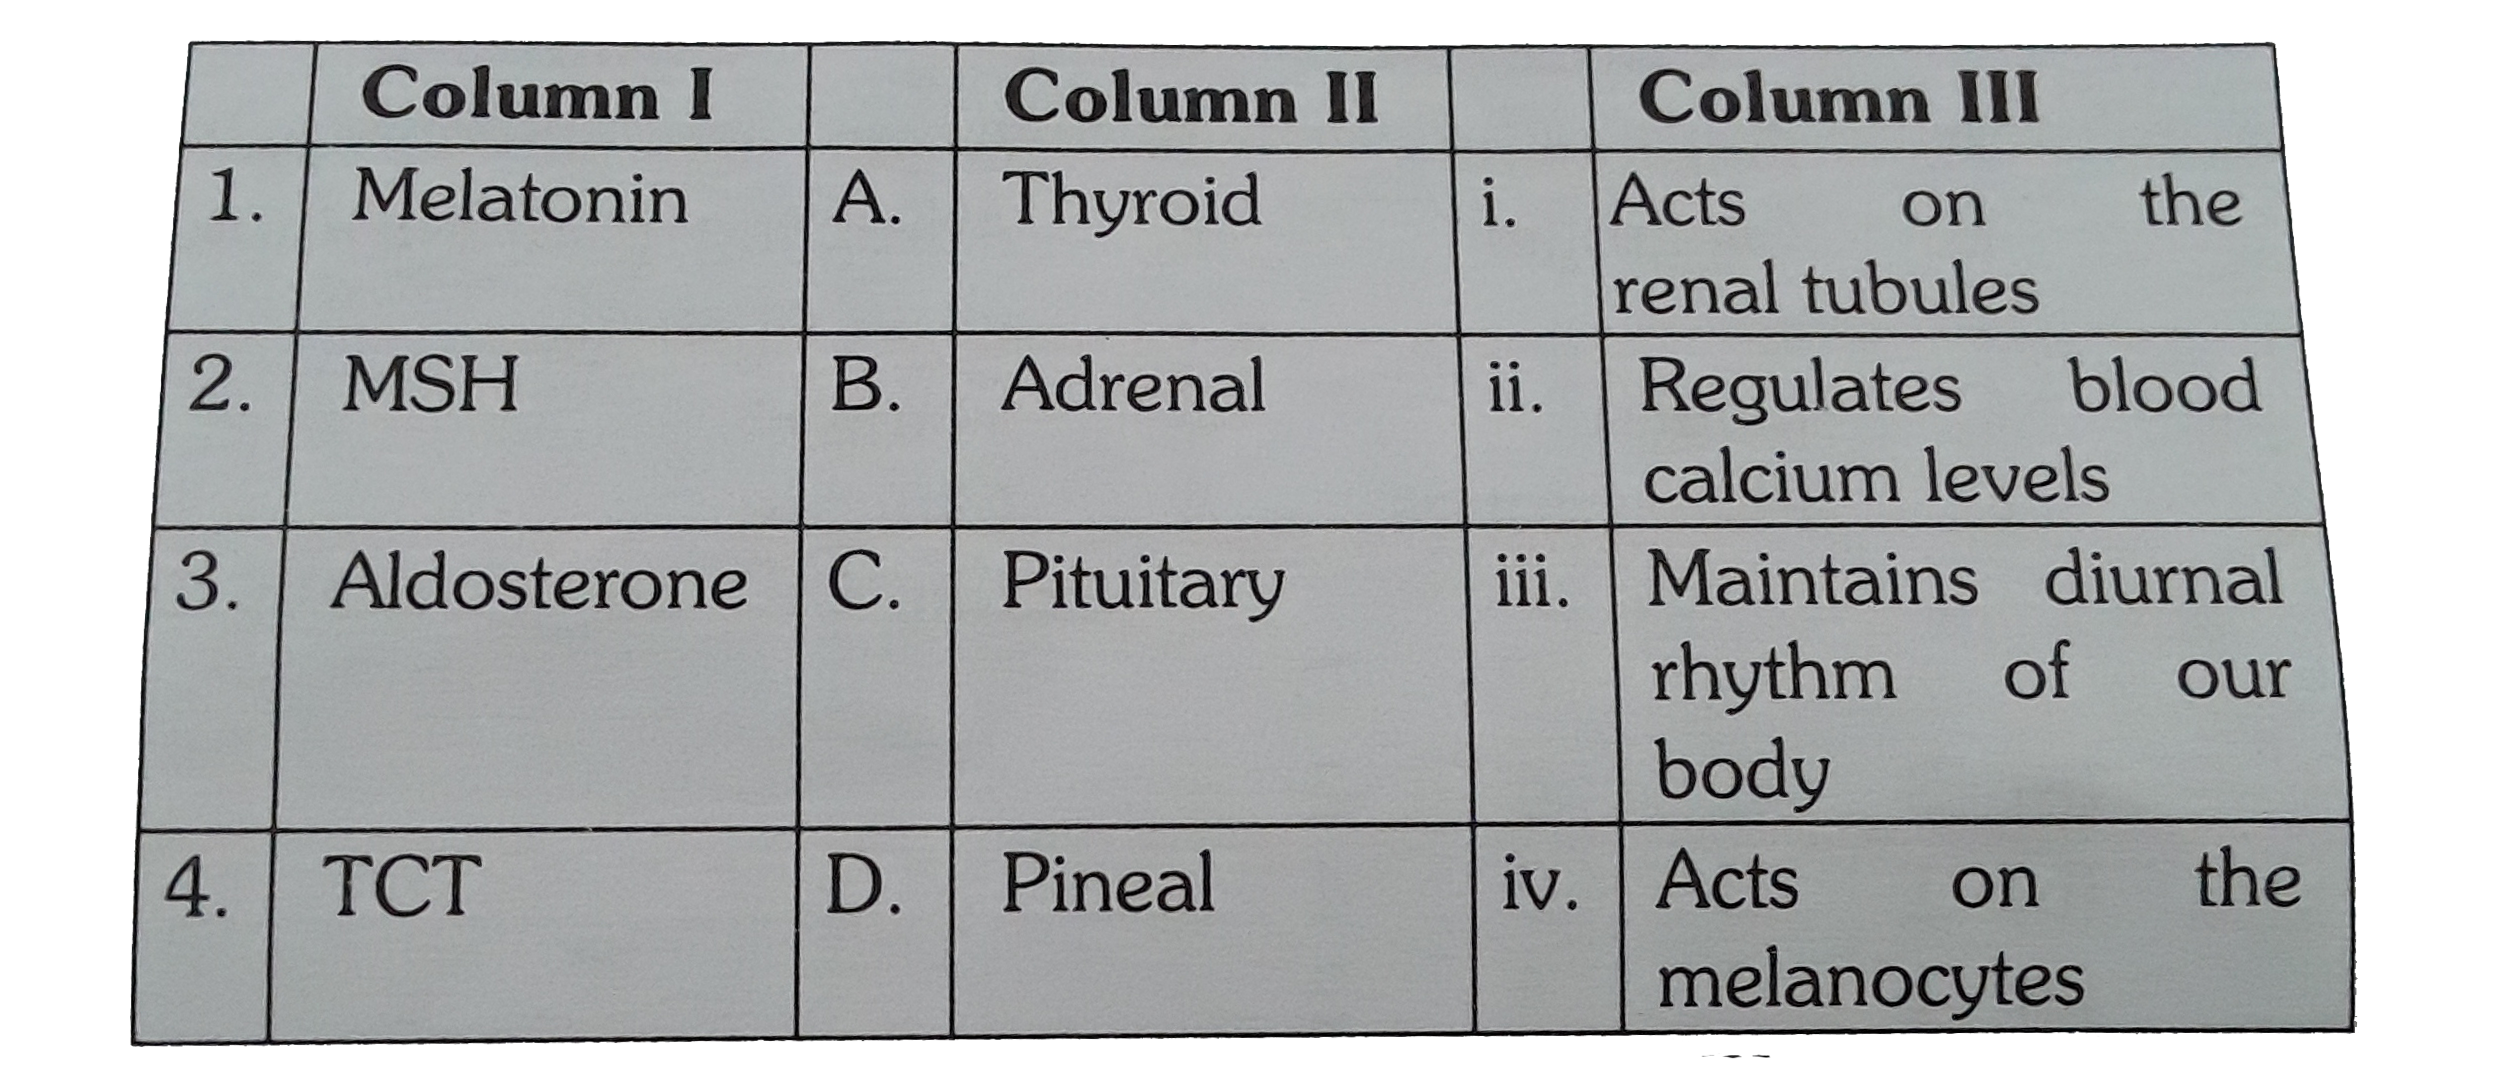 Match column I (hormone) with column II (endocrine gland) and column III (function)